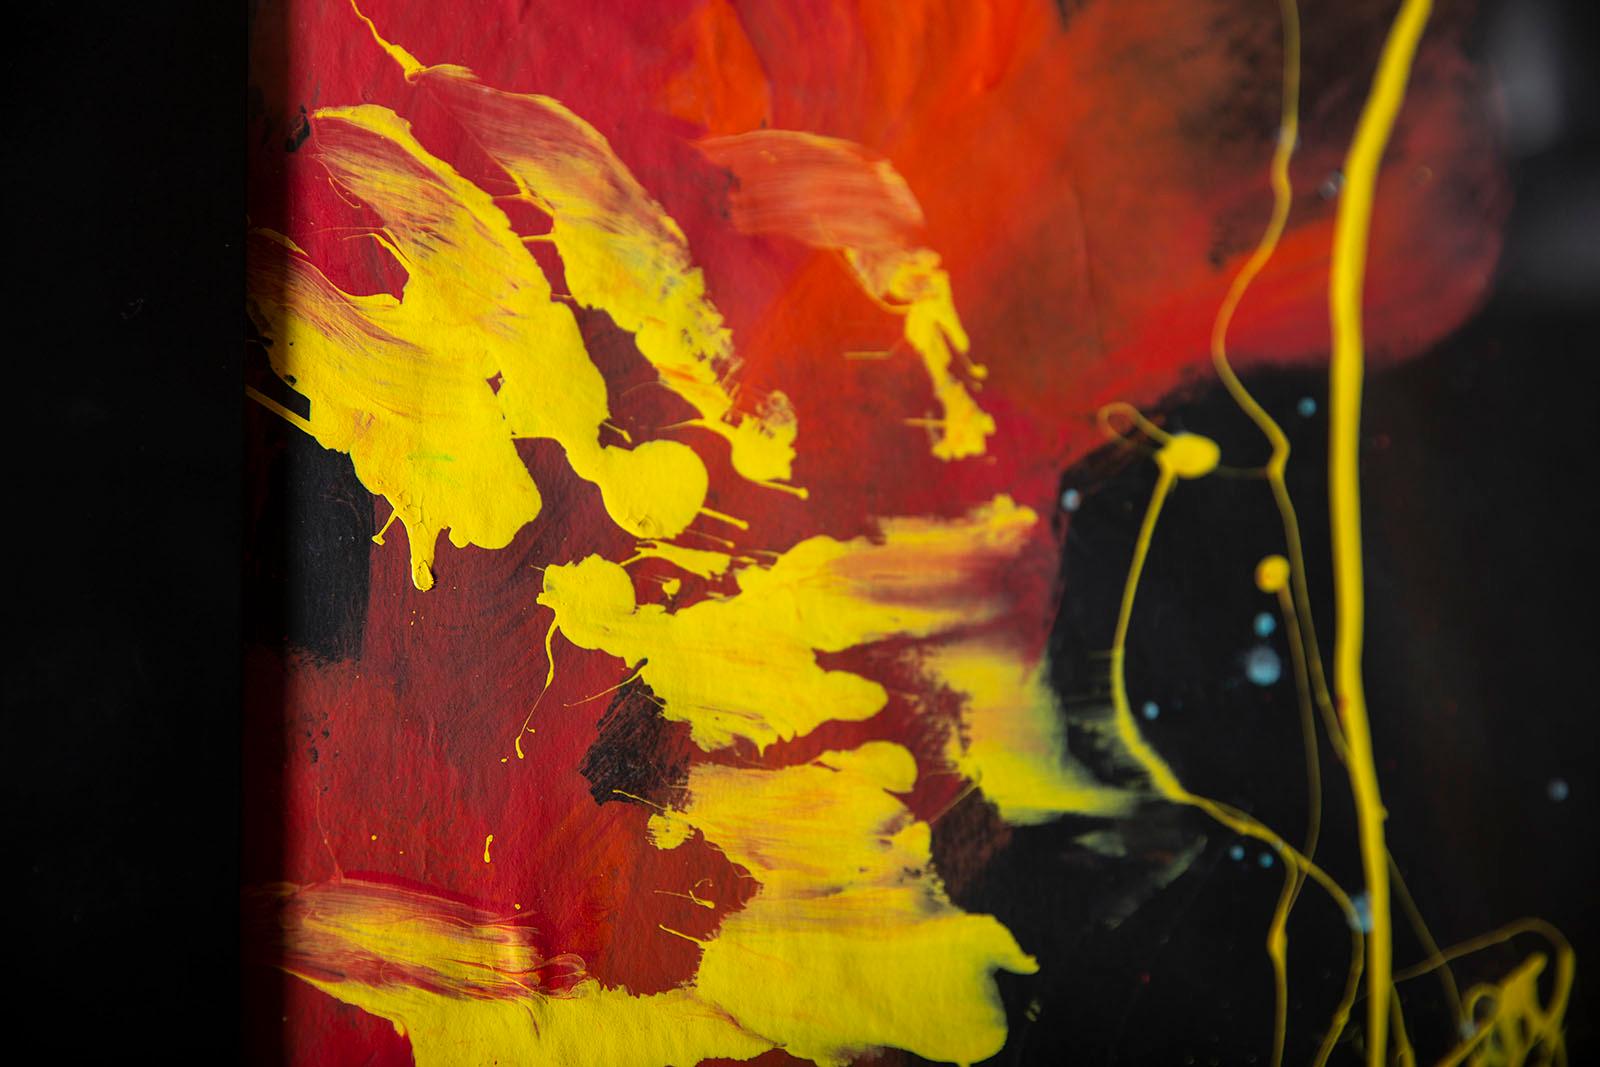 Artist: Denny Dent 
Title: Jim Morrison Portrait 
Medium: Oil on paper framed 
Size framed: 74 1/4